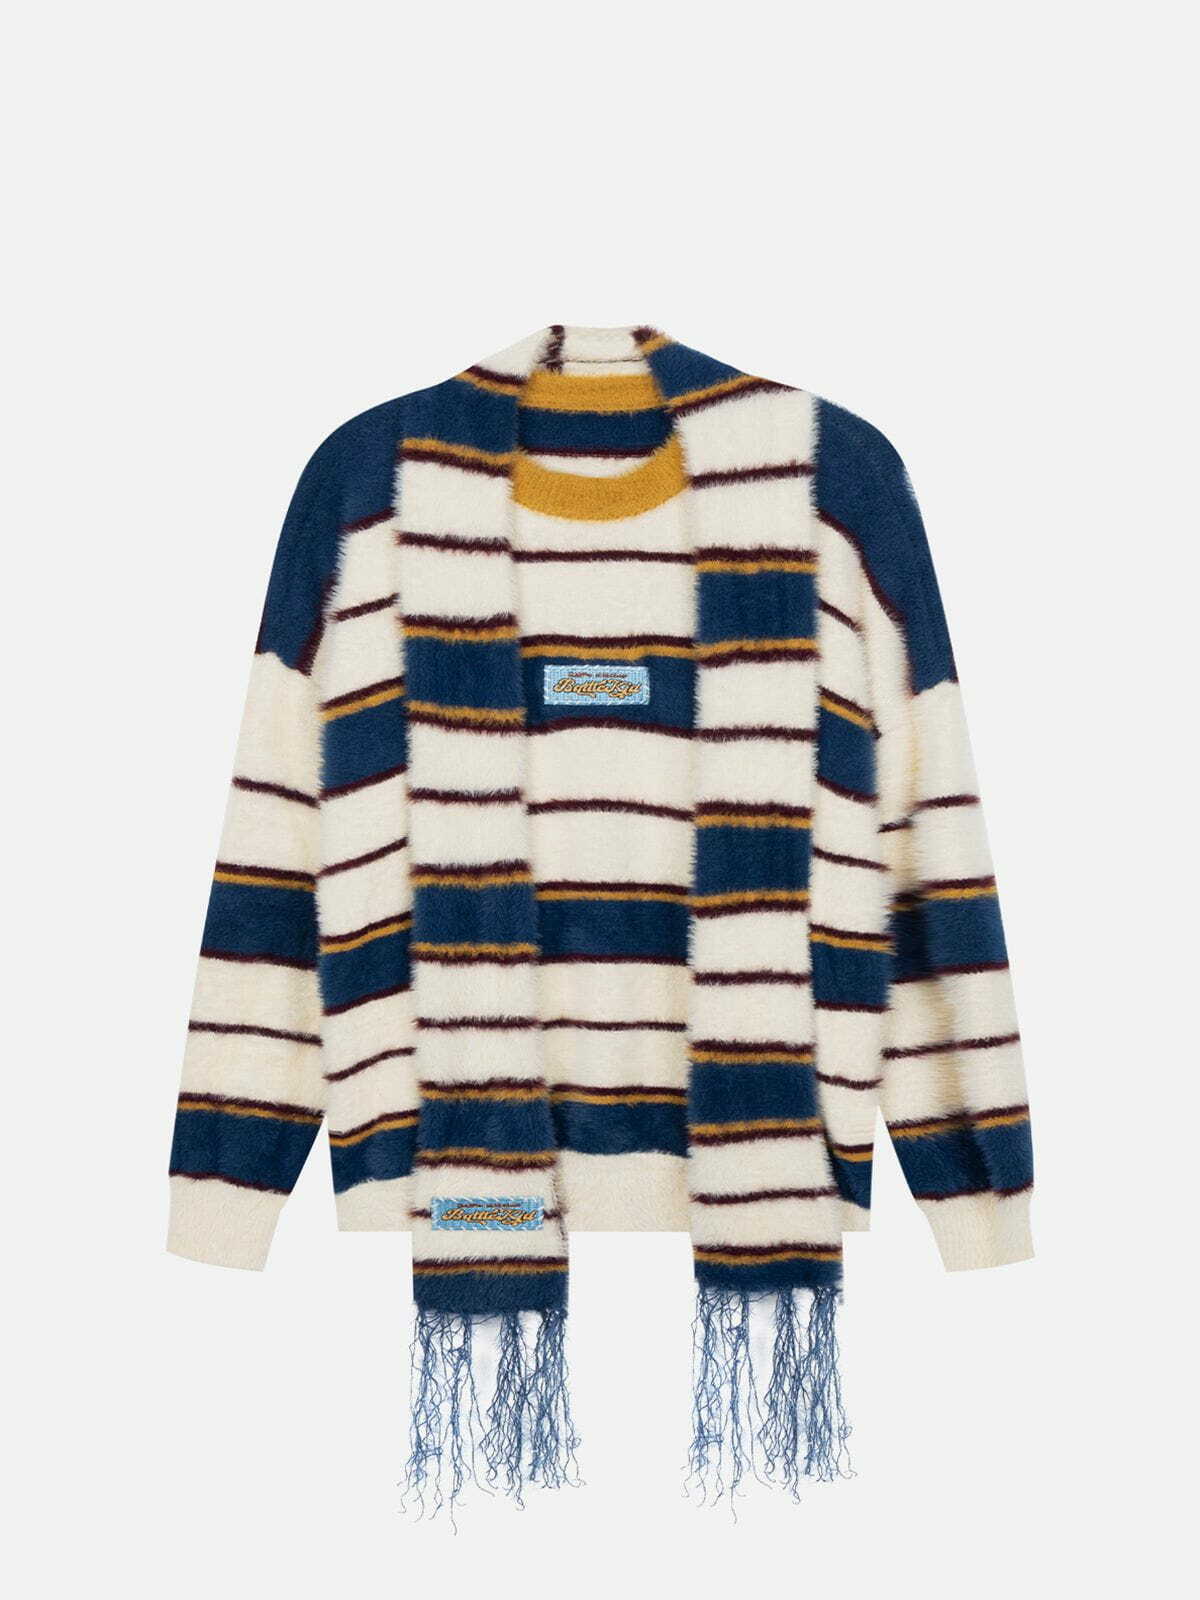 colorful striped knit sweater retro chic statement 7360